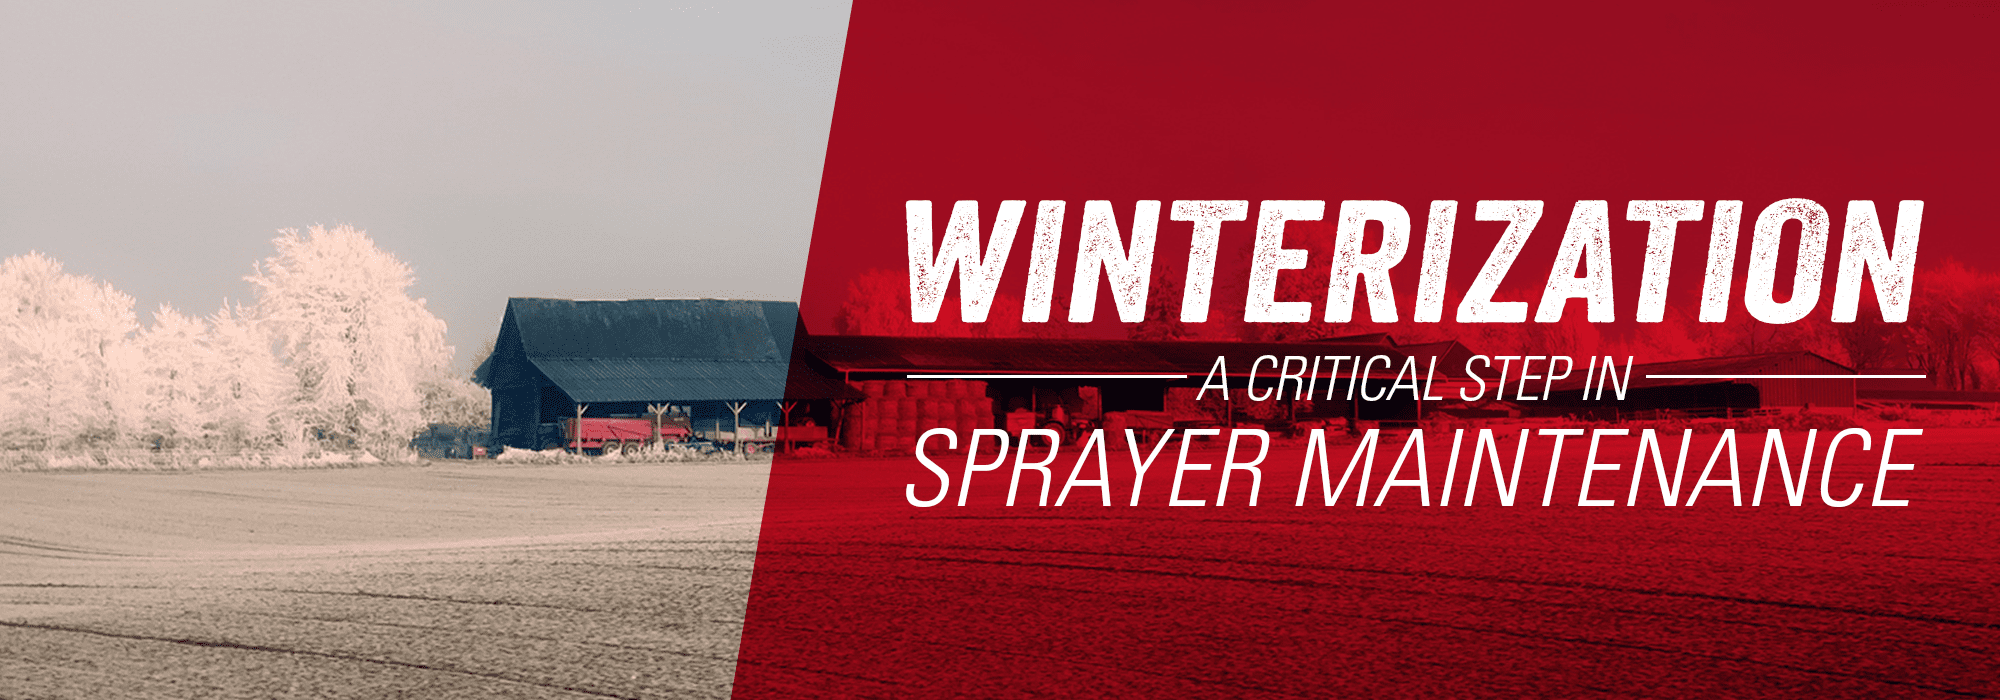 Apache Sprayers Winterization A Critical Step in Sprayer Maintenance Header